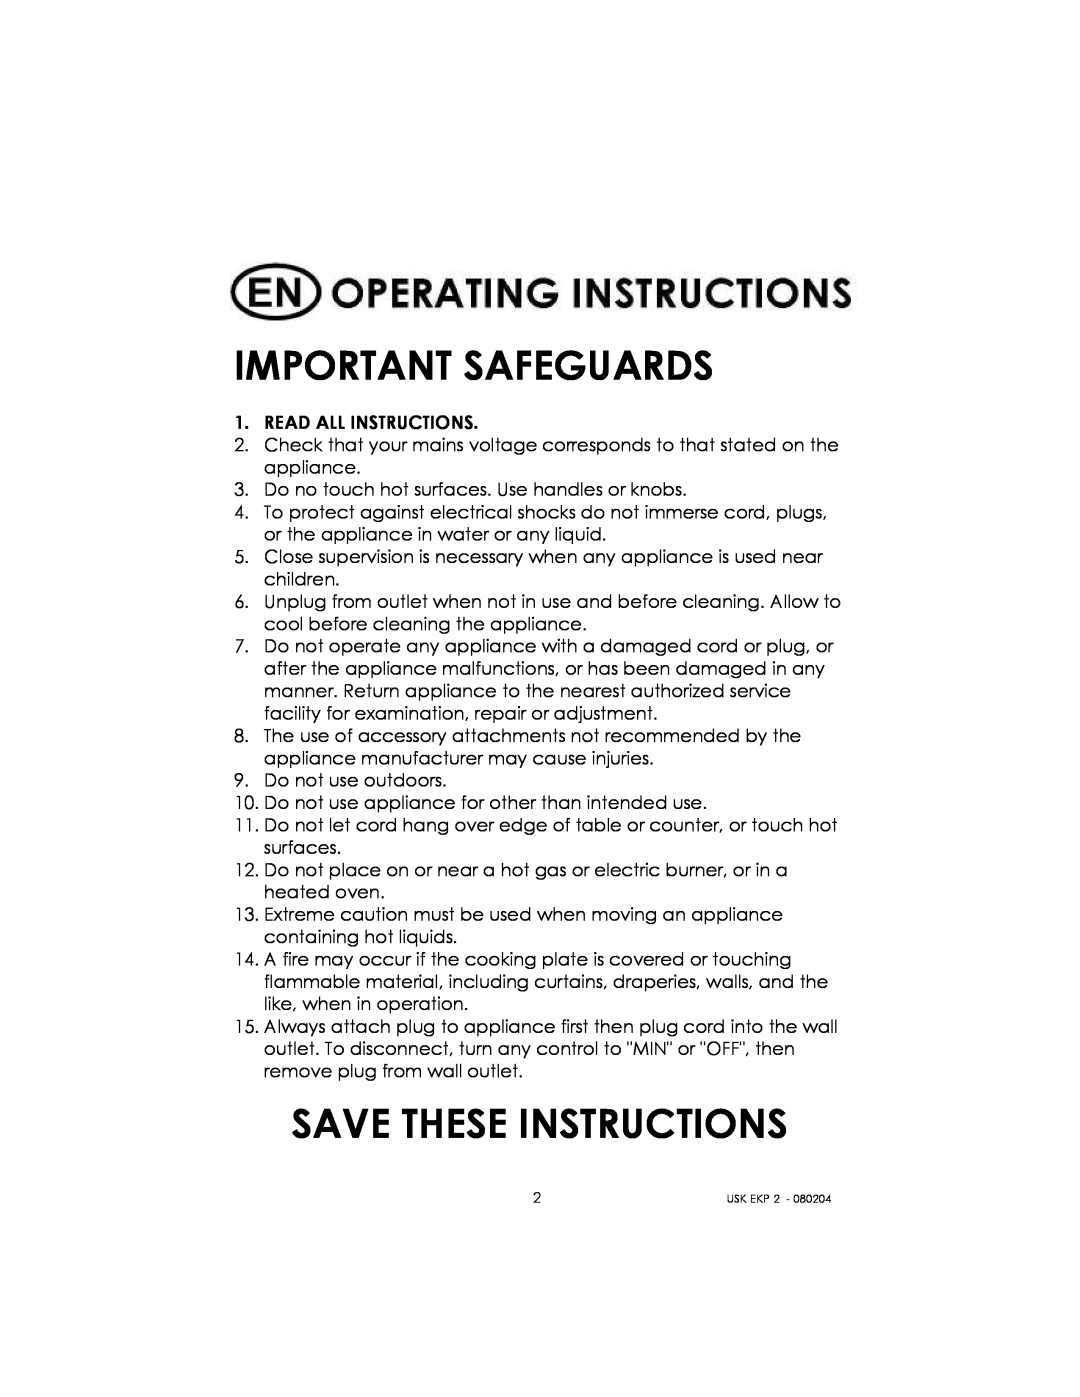 Kalorik 80204 manual Important Safeguards, Save These Instructions 